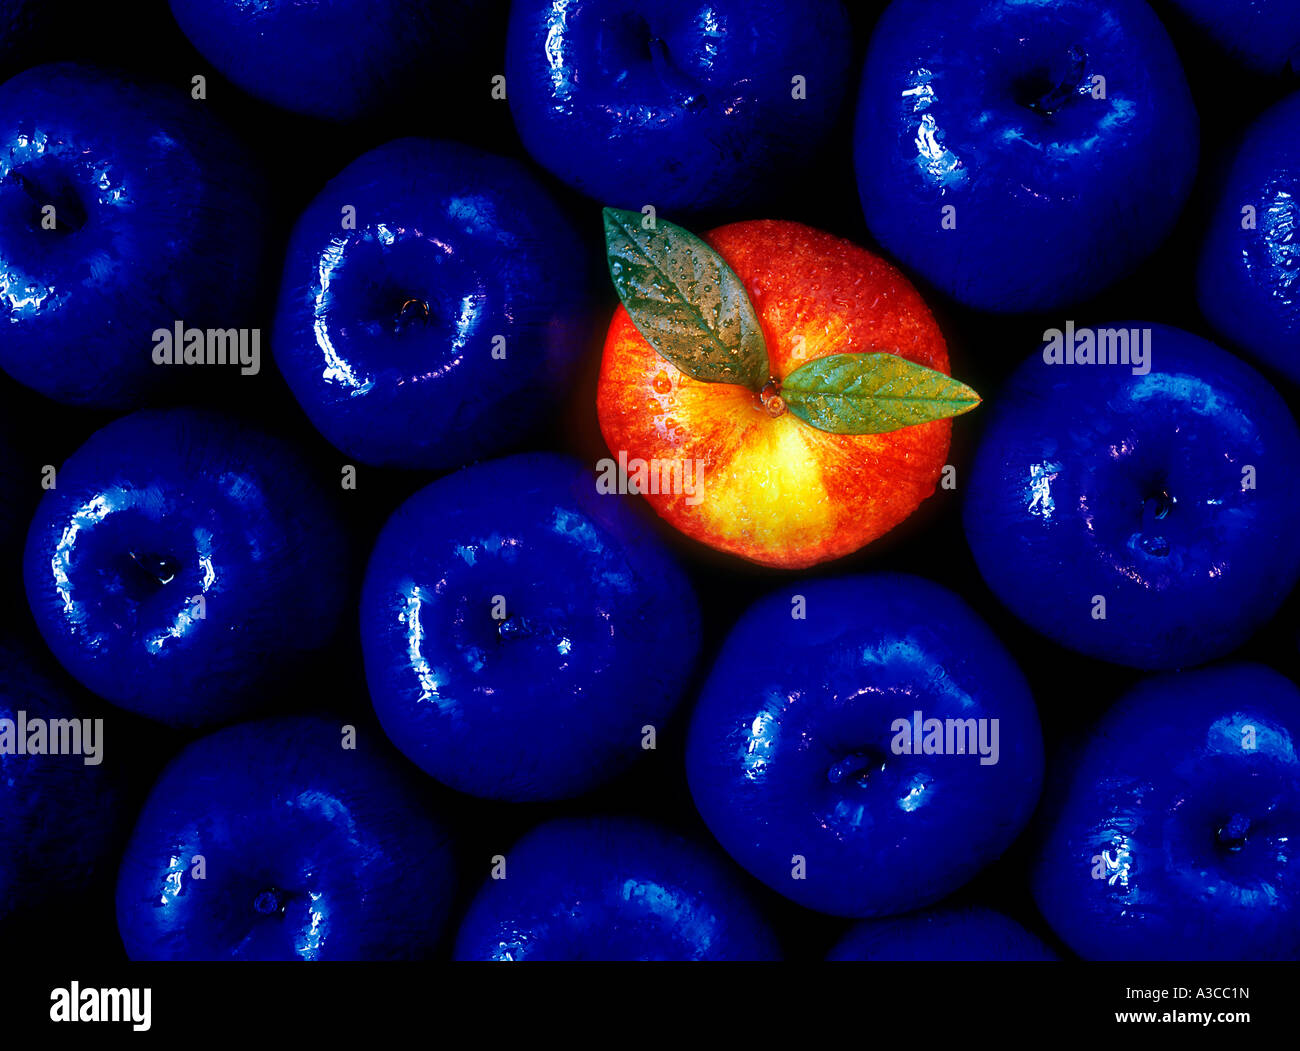 Mele blu immagini e fotografie stock ad alta risoluzione - Alamy